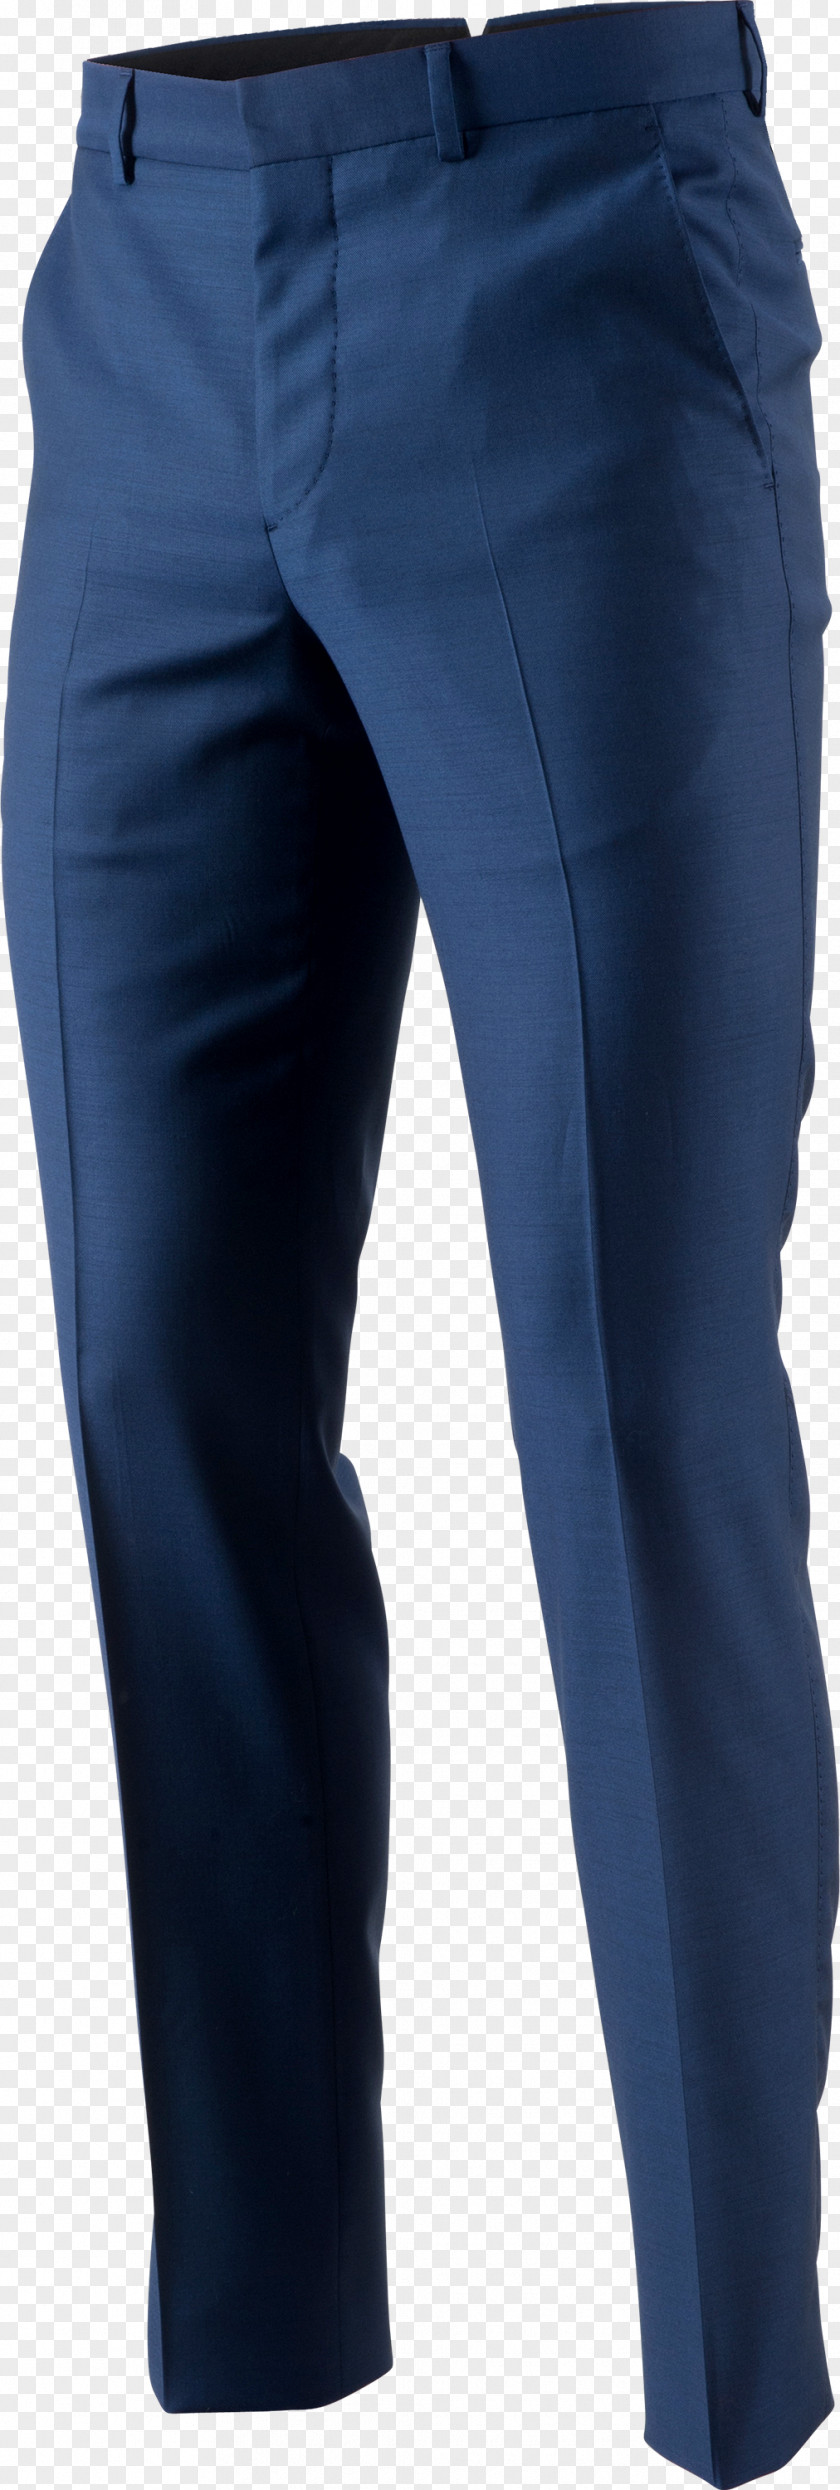 Jeans Armani Slim-fit Pants Clothing PNG